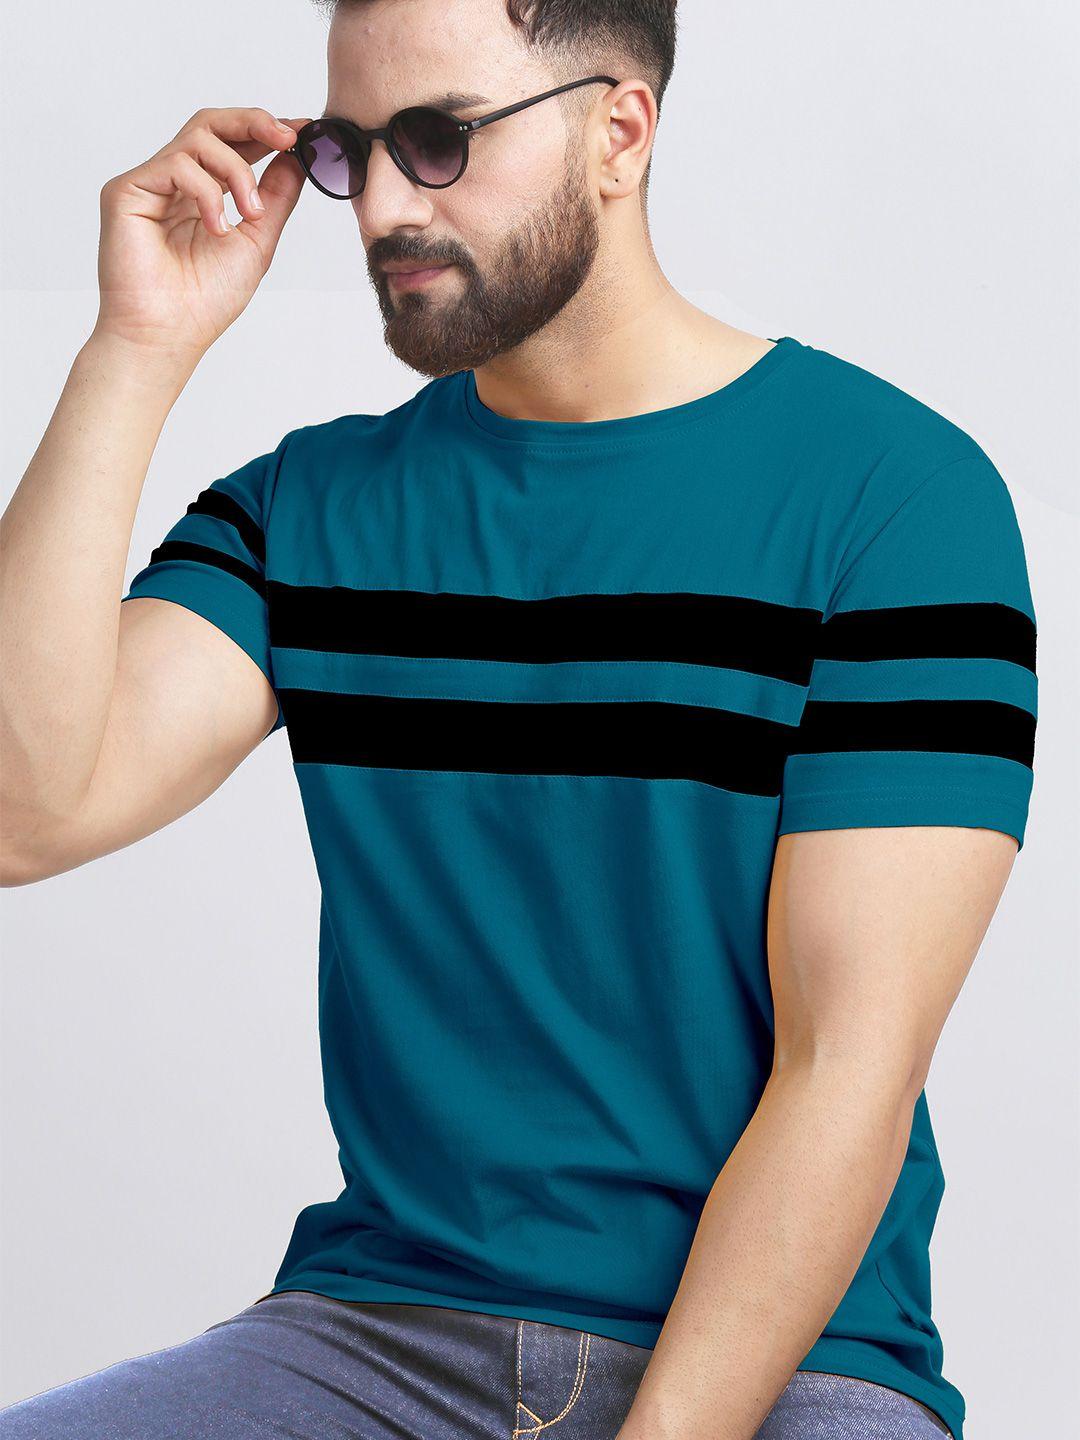 ausk teal blue & black colorblocked round neck half sleeve t-shirt